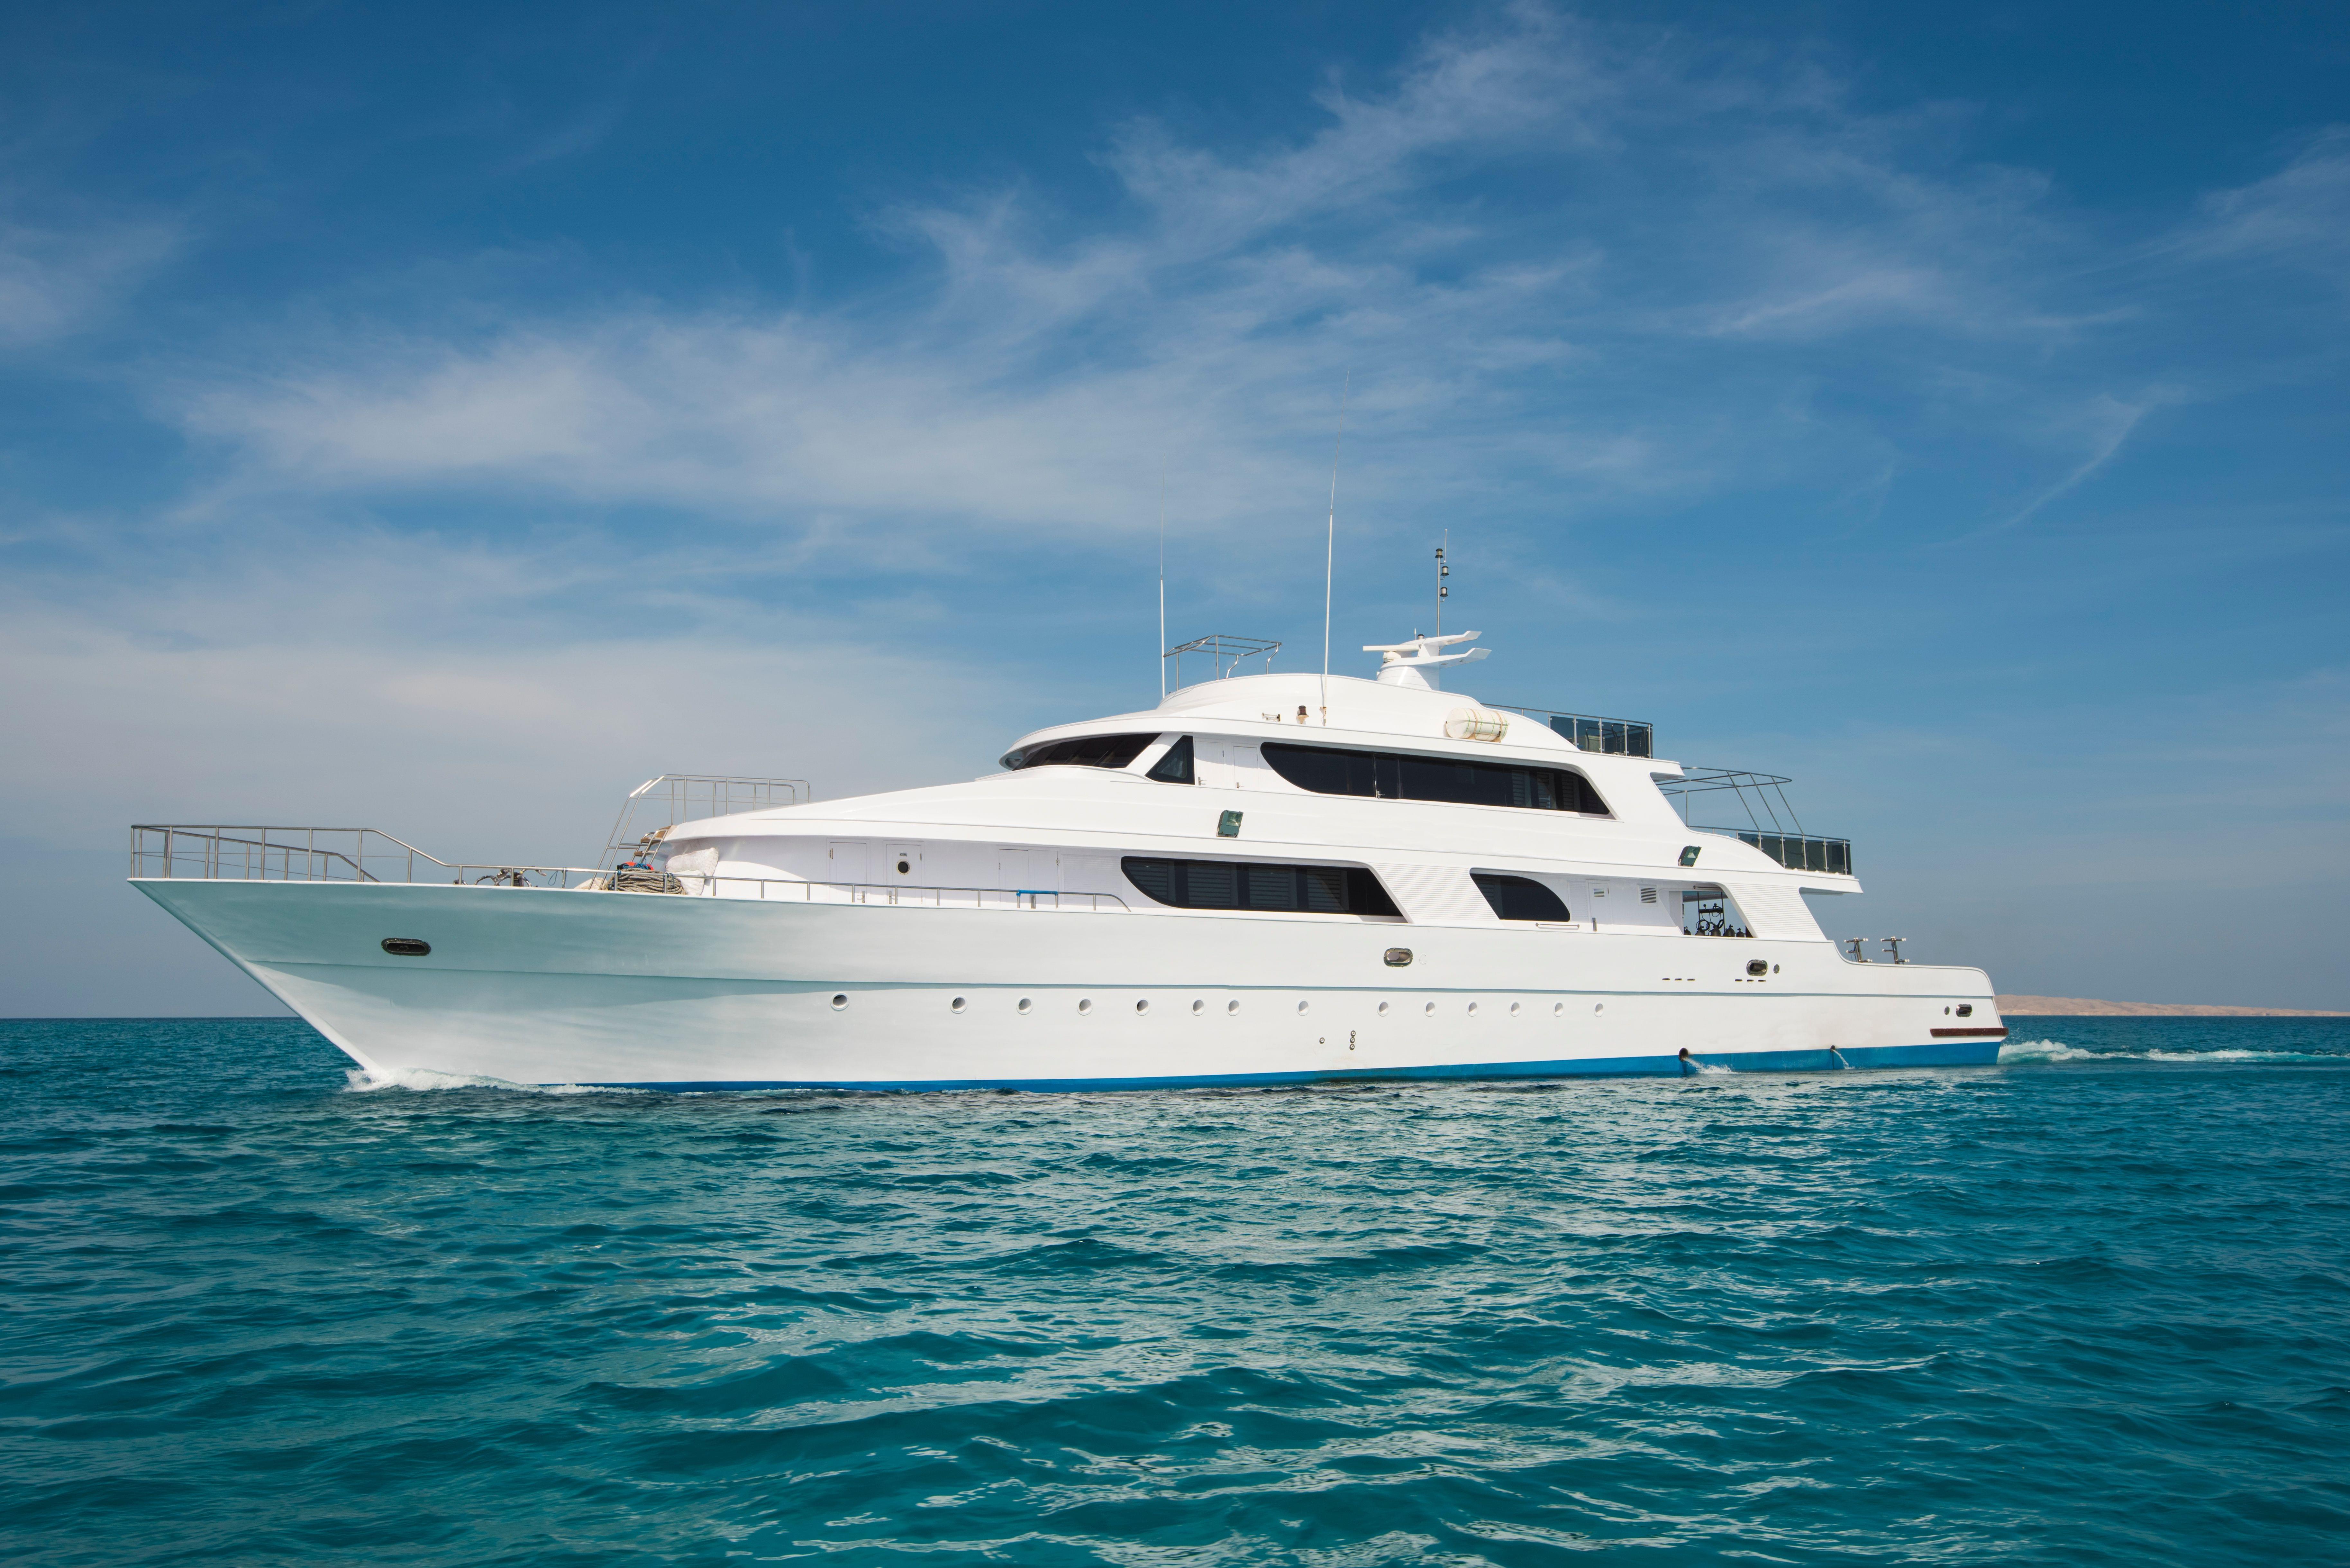 Dubai Marina Yacht Tours